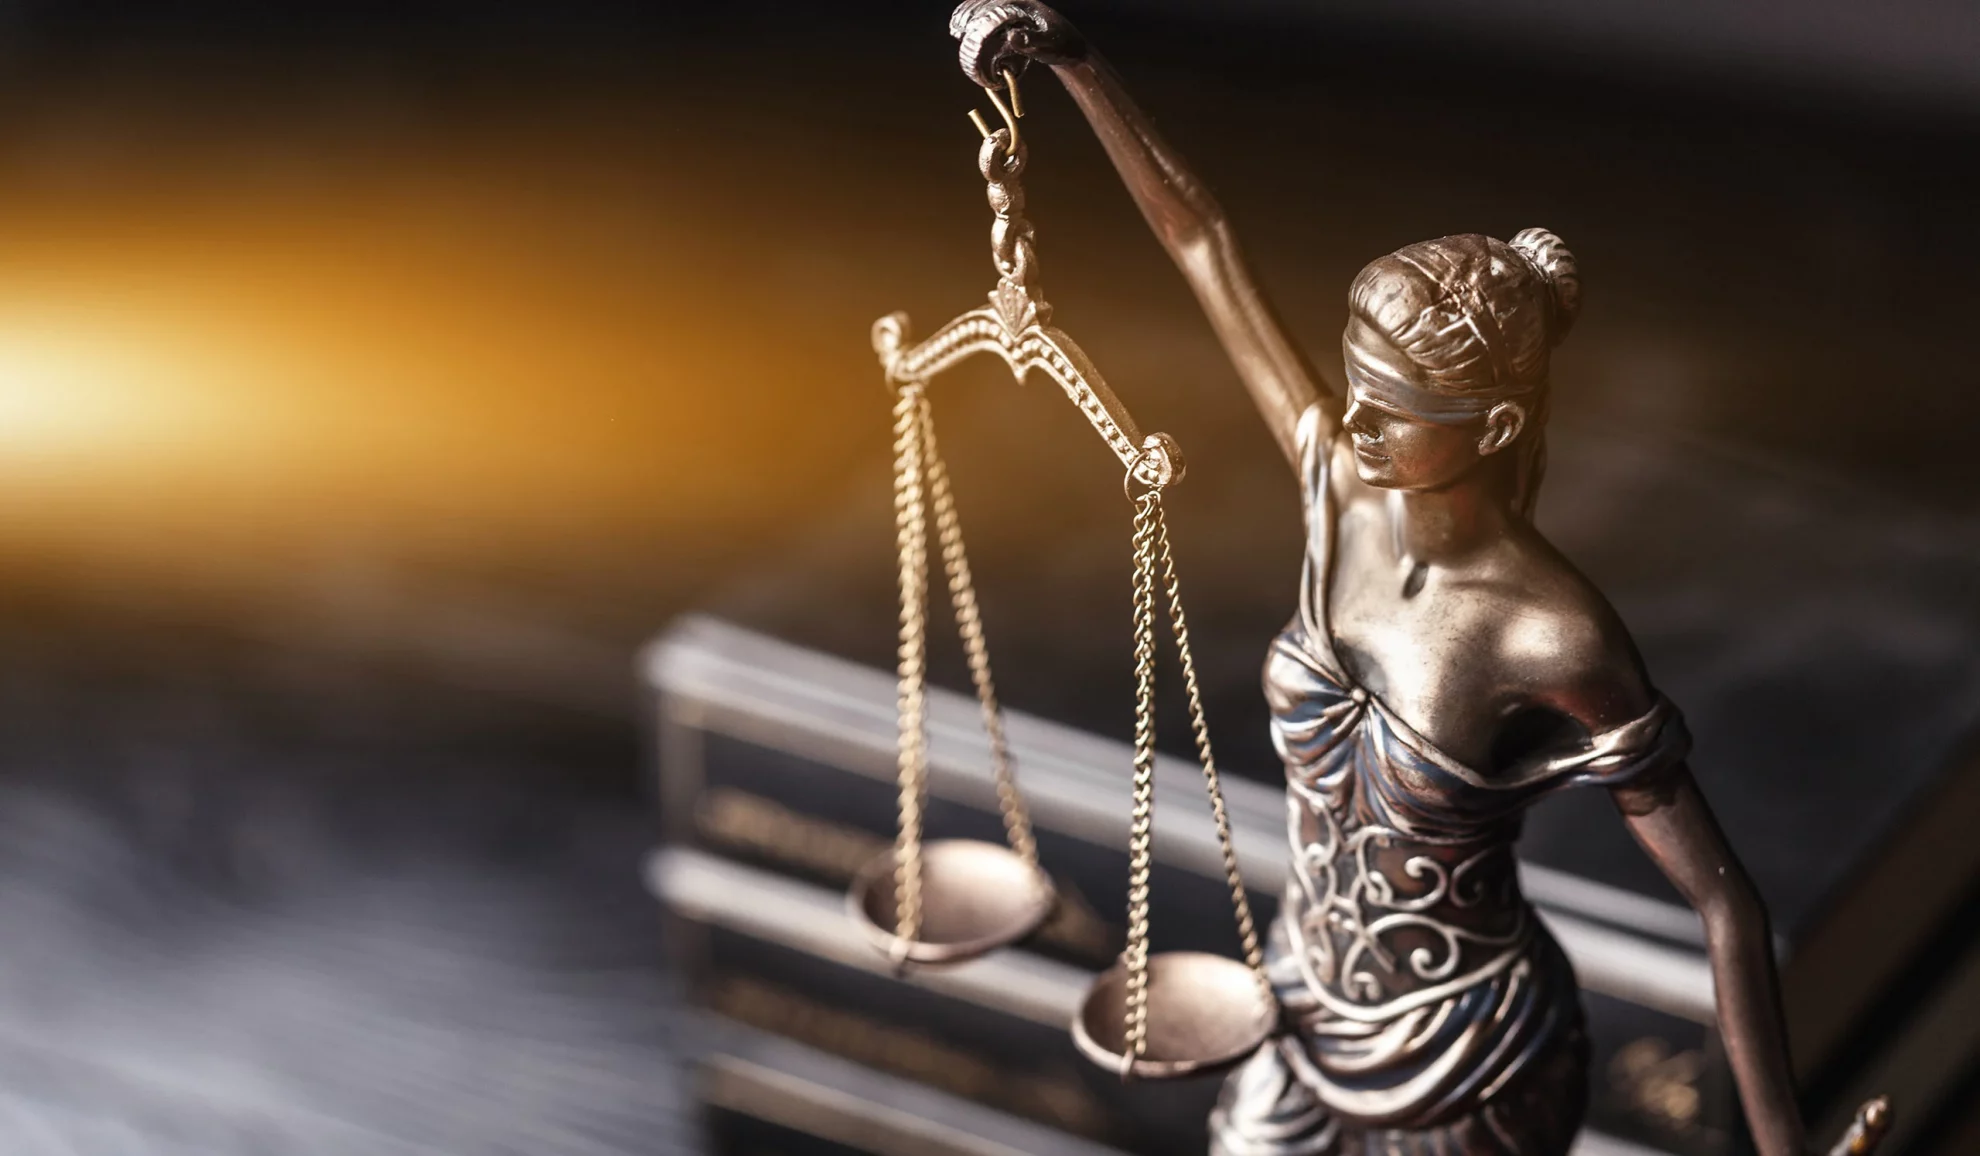 lady justice law figurine on lawyers desk